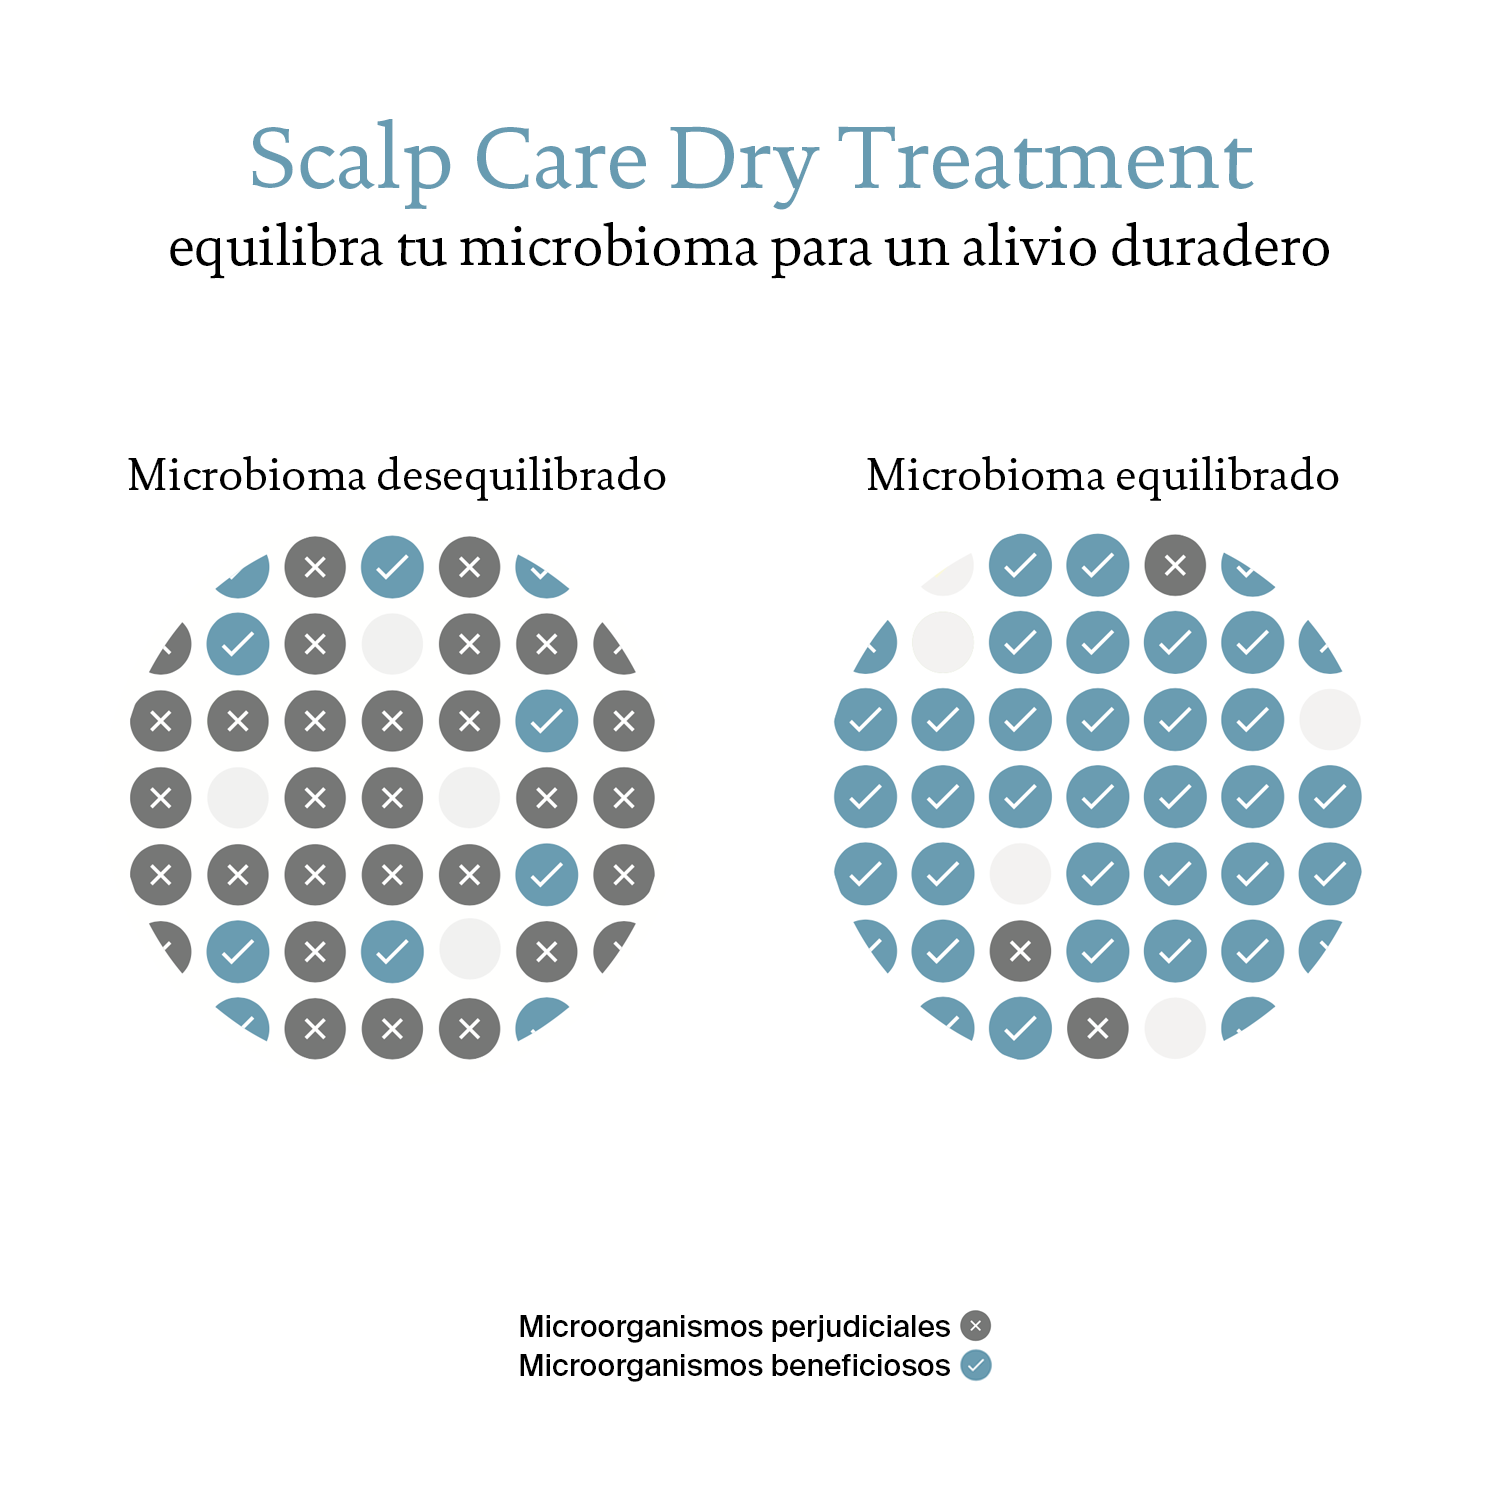 Scalp Care Dry Scalp Treatment 100 ml